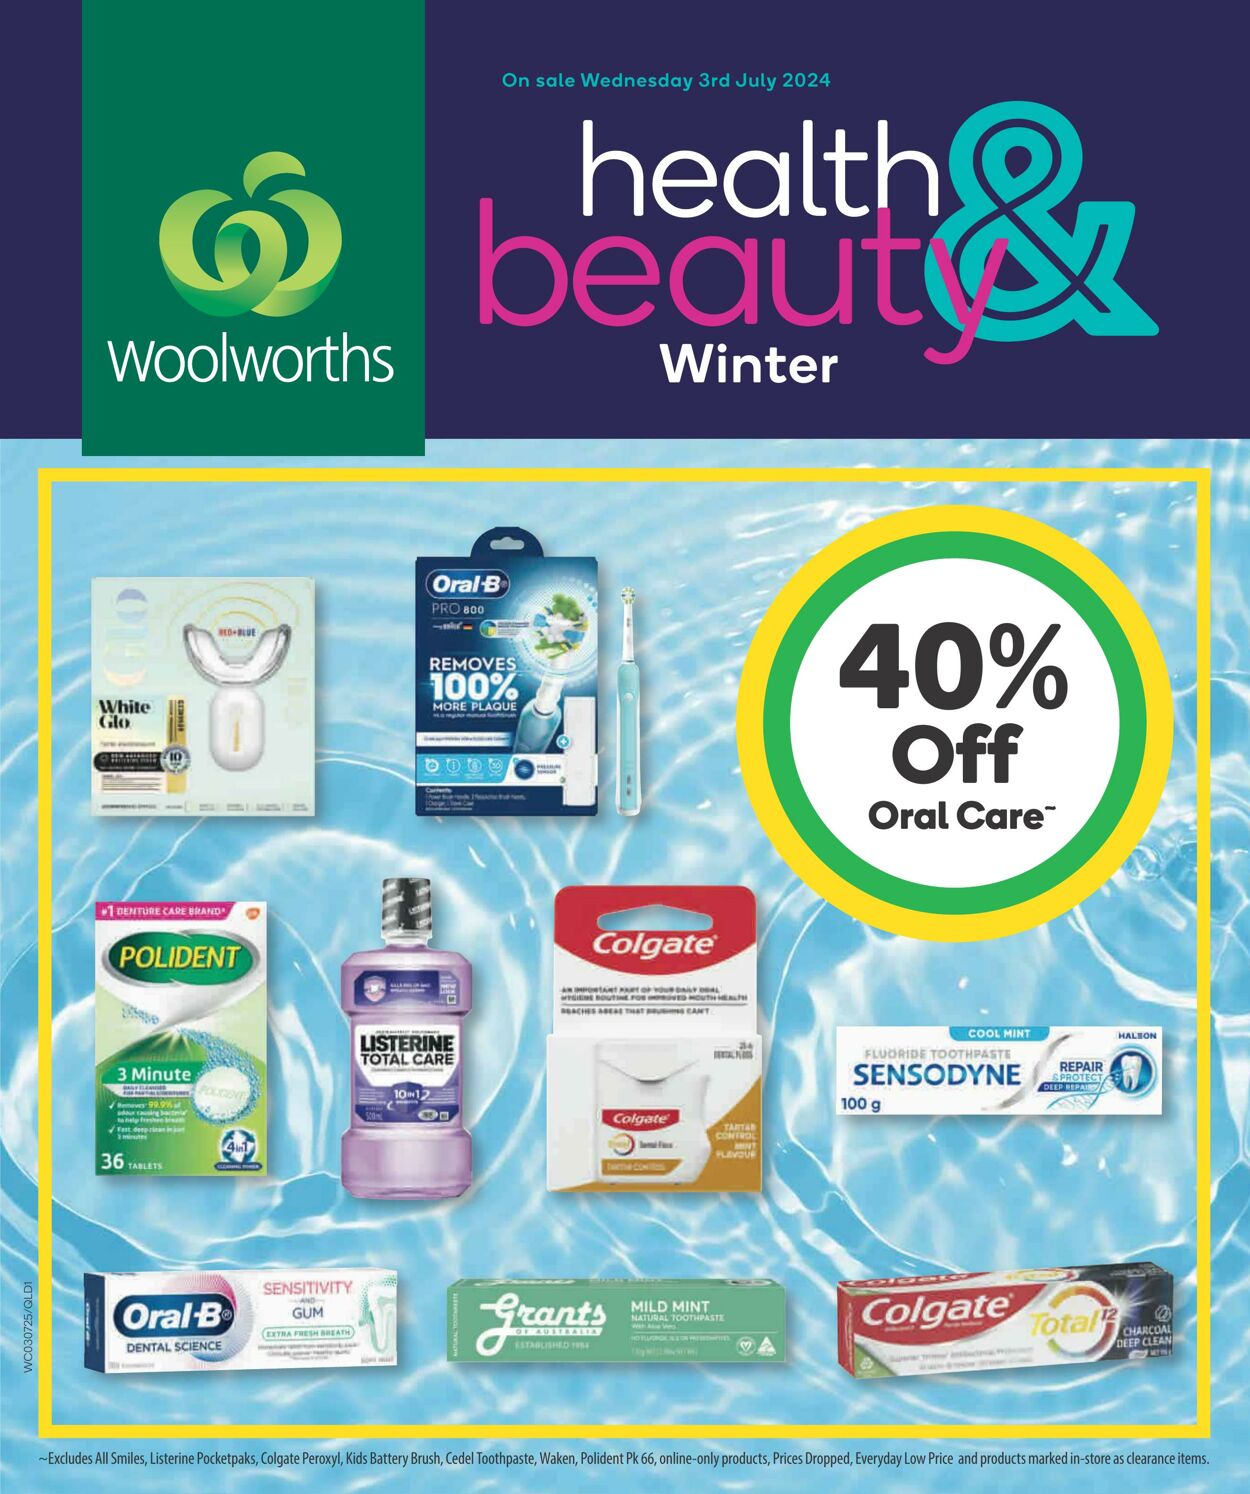 Catalogue Woolworths - Winter Health & Beauty Catalogue QLD 3 Jul, 2024 - 9 Jul, 2024